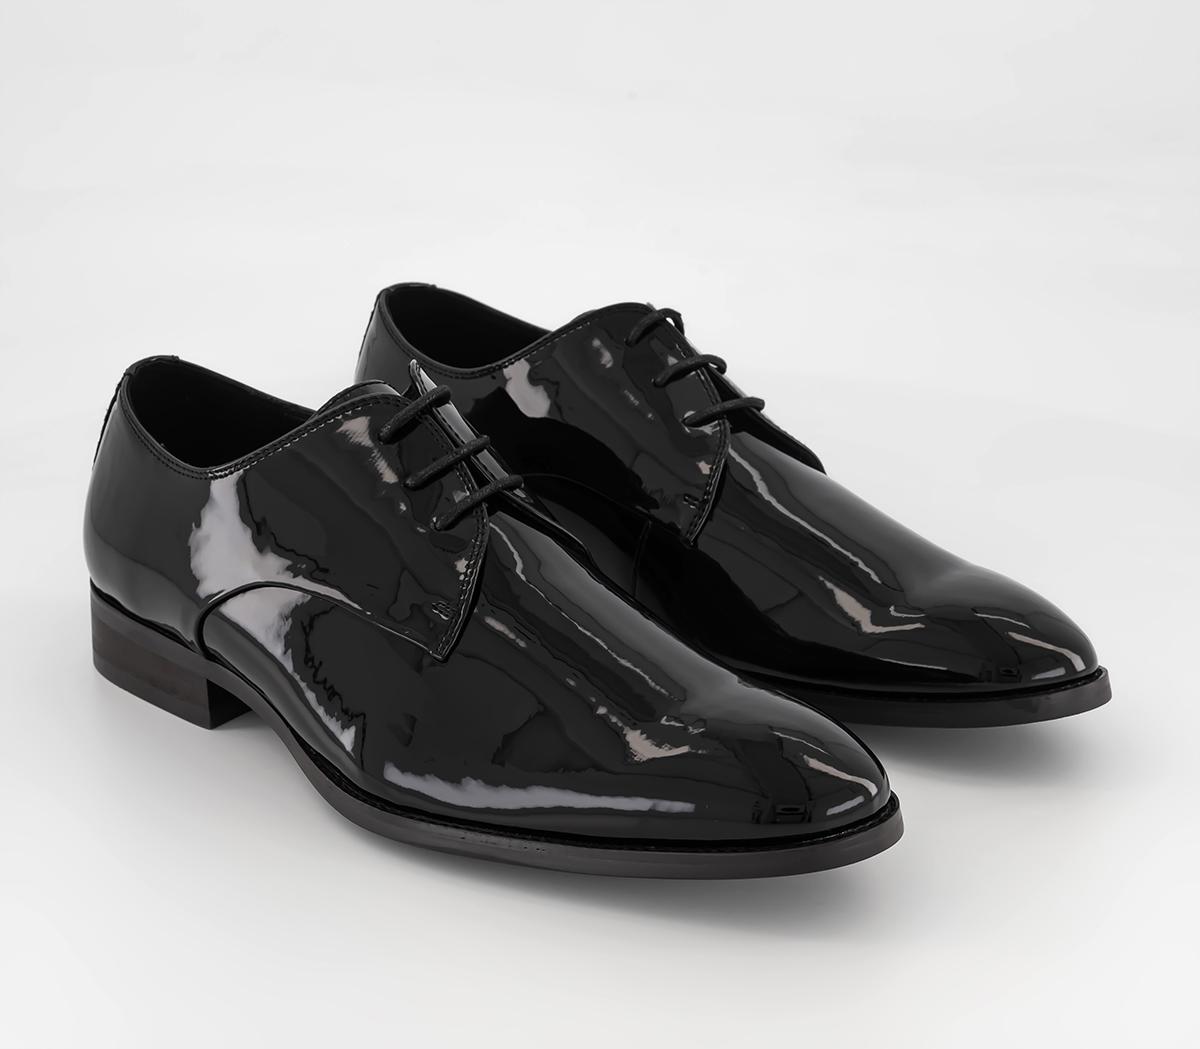 OFFICE Mens Marsden 3 Eye Patent Derby Shoes Black, 6